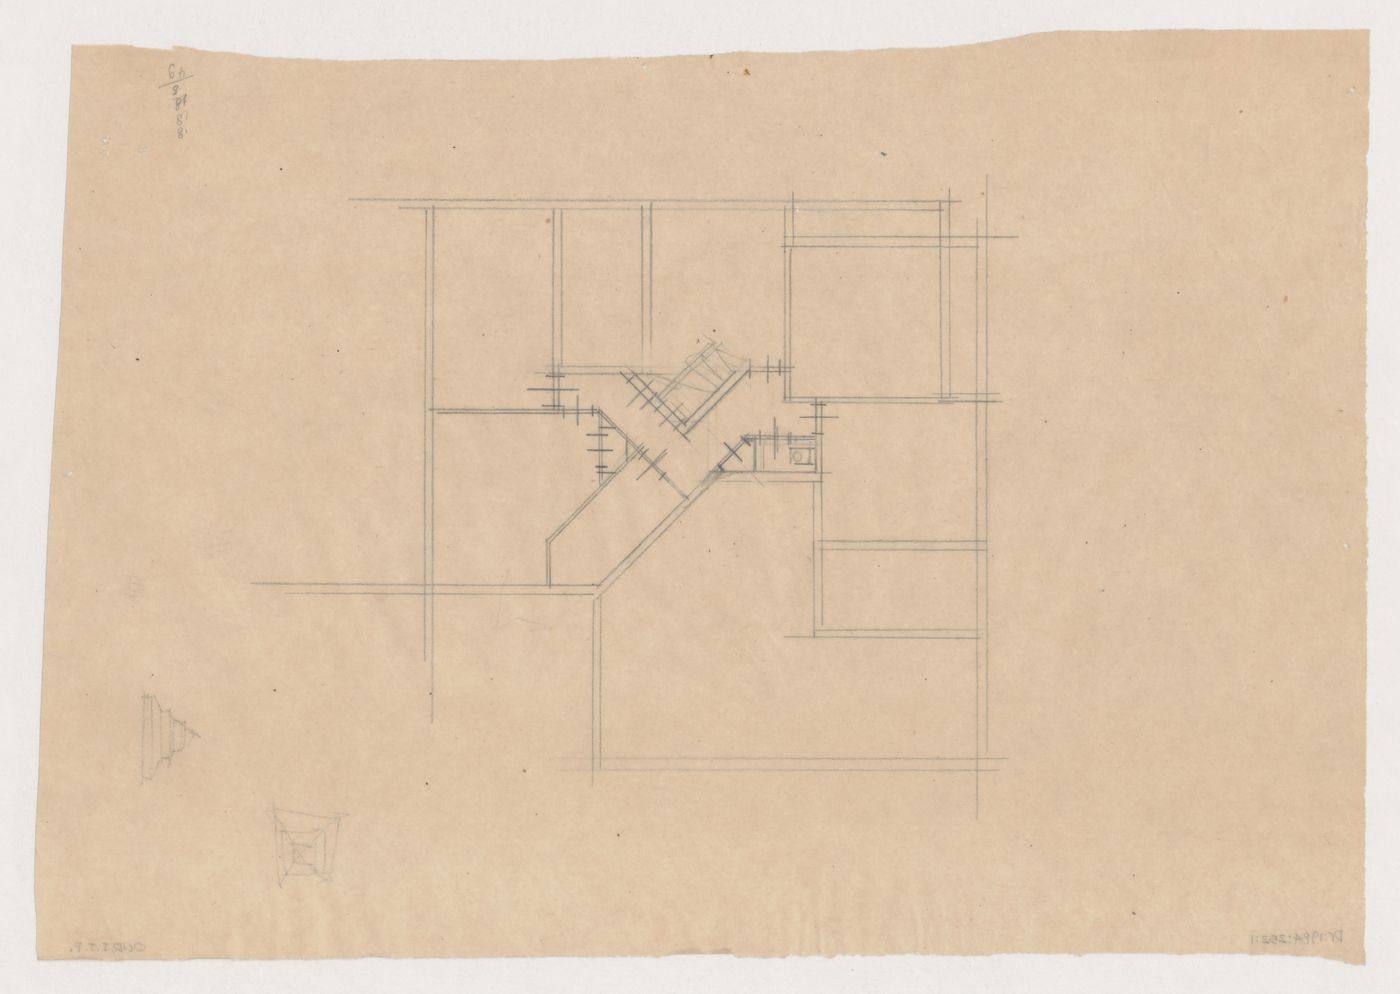 Sketch plan, possibly for Block 9, Spangen Housing Estate, Rotterdam, Netherlands